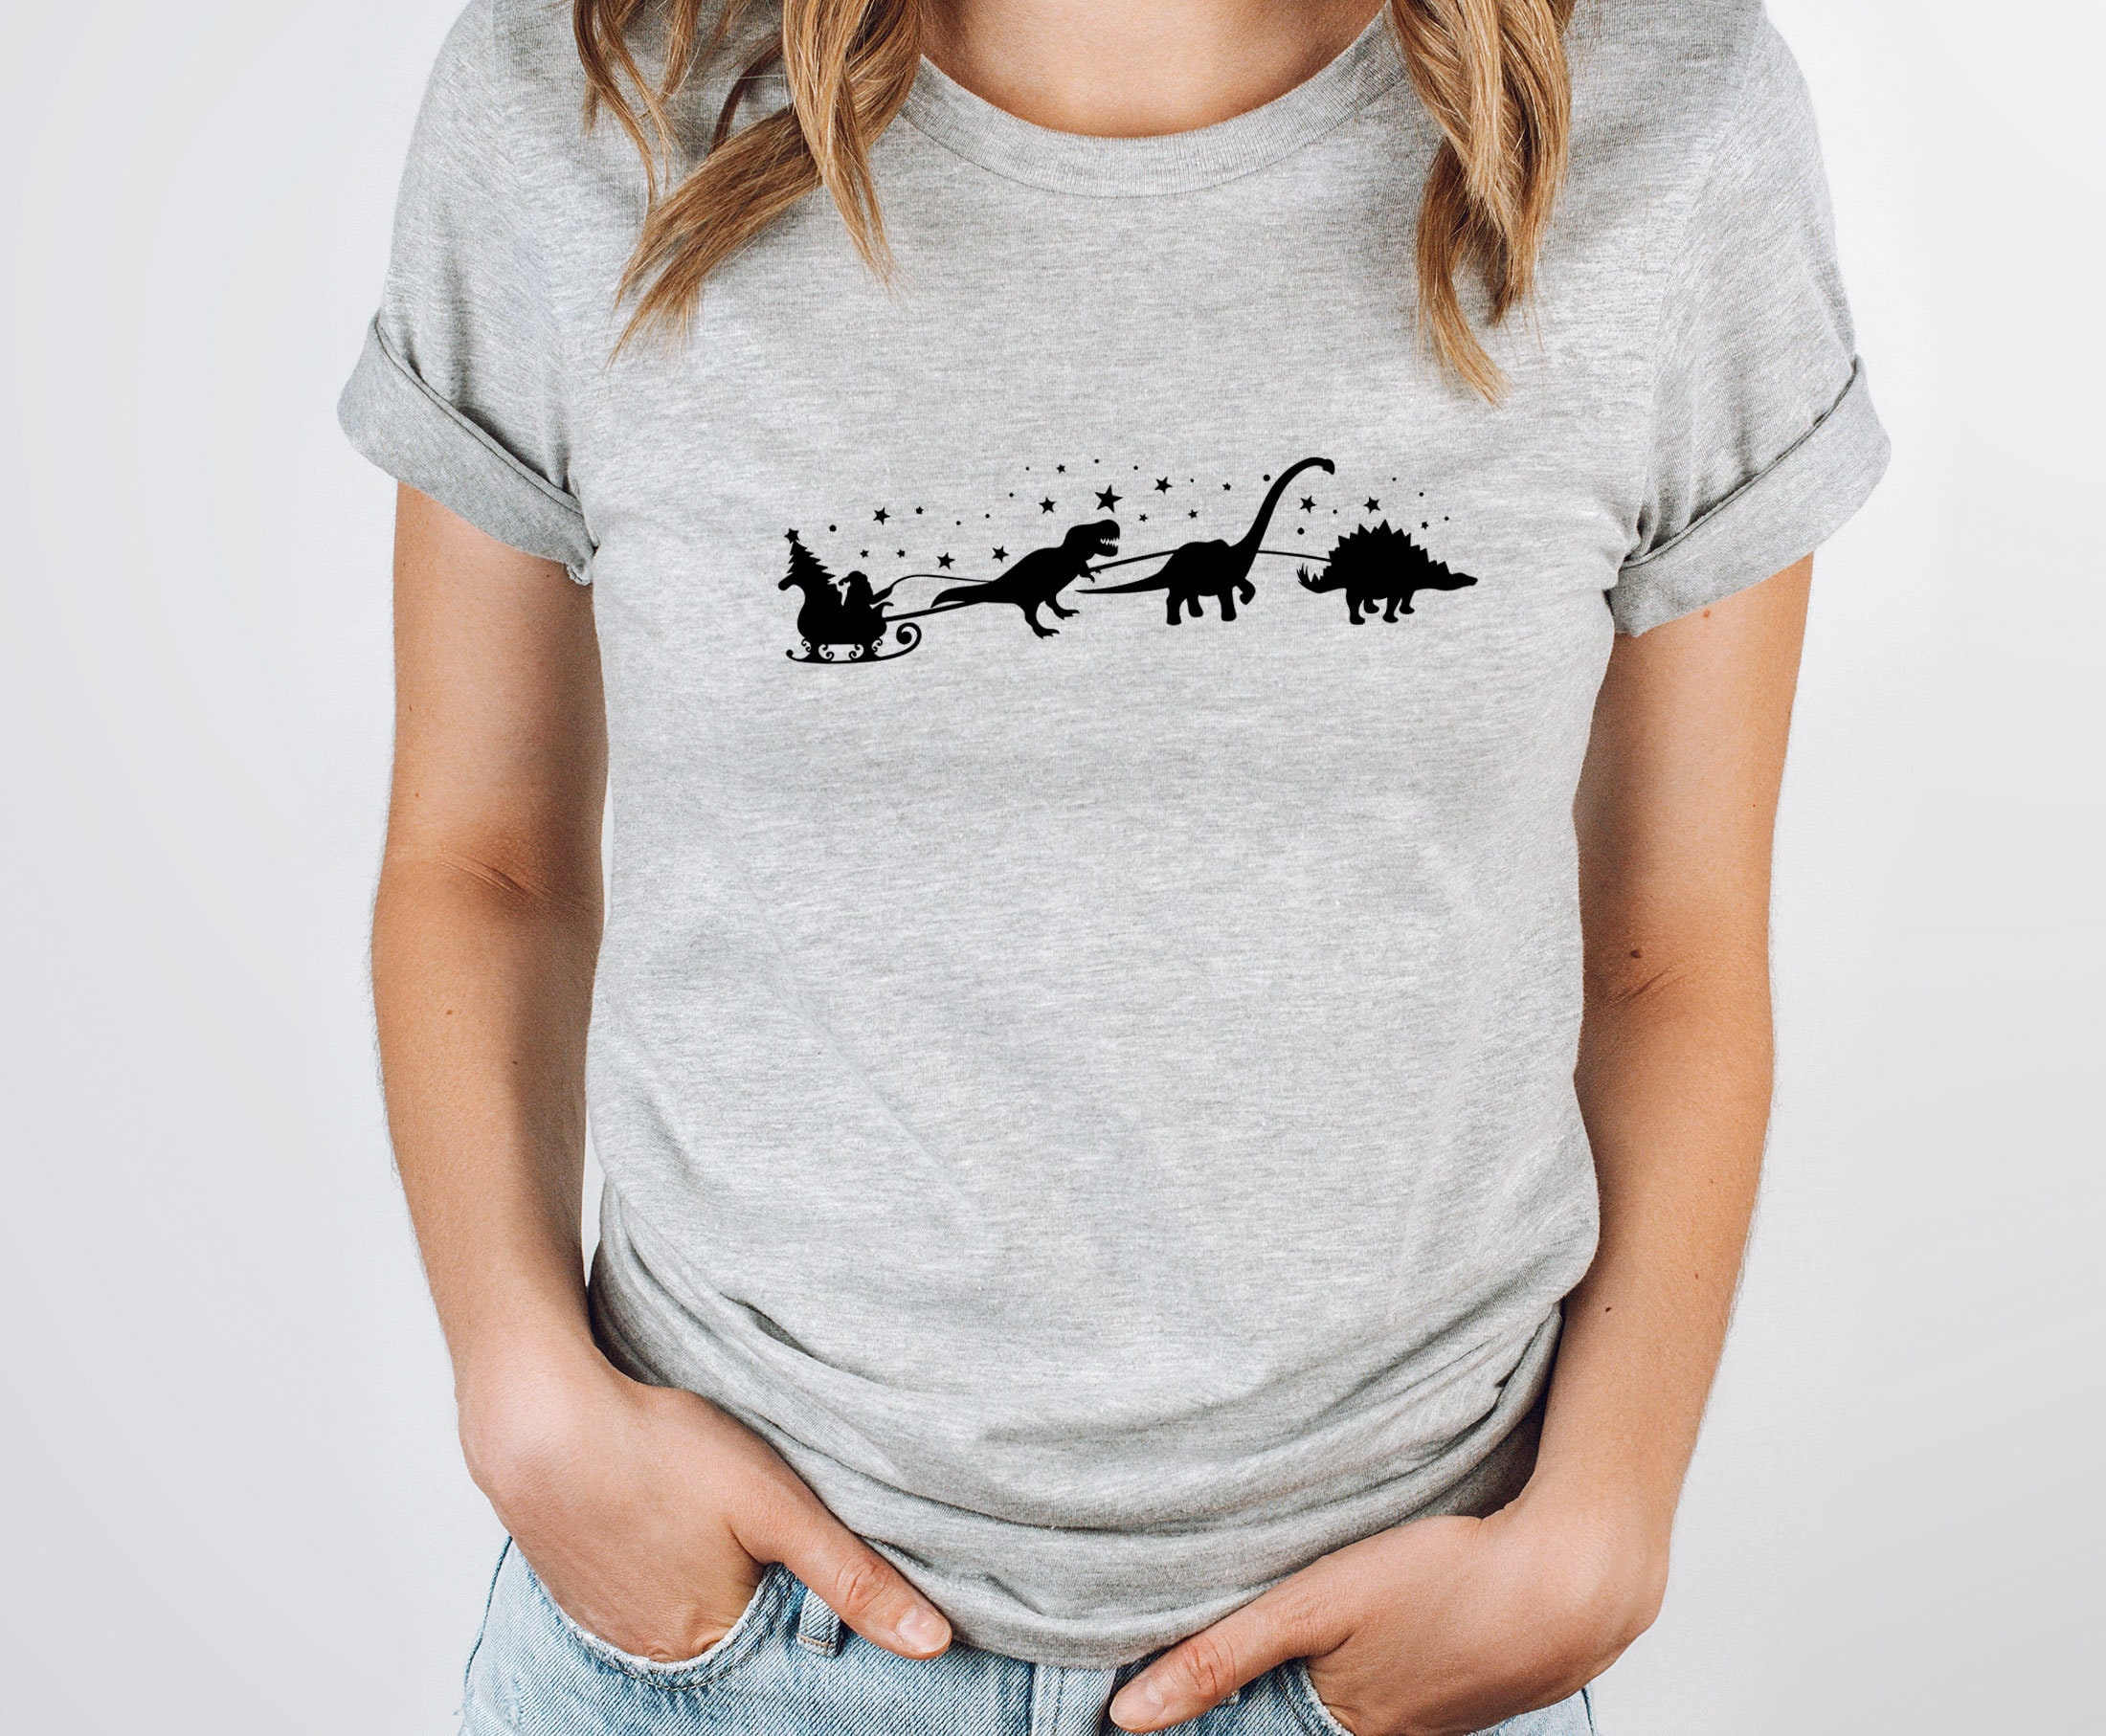 Discover Christmas Dinosaur Shirt, Santa Chritmas T-shirt, Santa Sleigh Tshirt, Kids Christmas T shirt, Christmas Kids Gifts, Funny Christmas Top